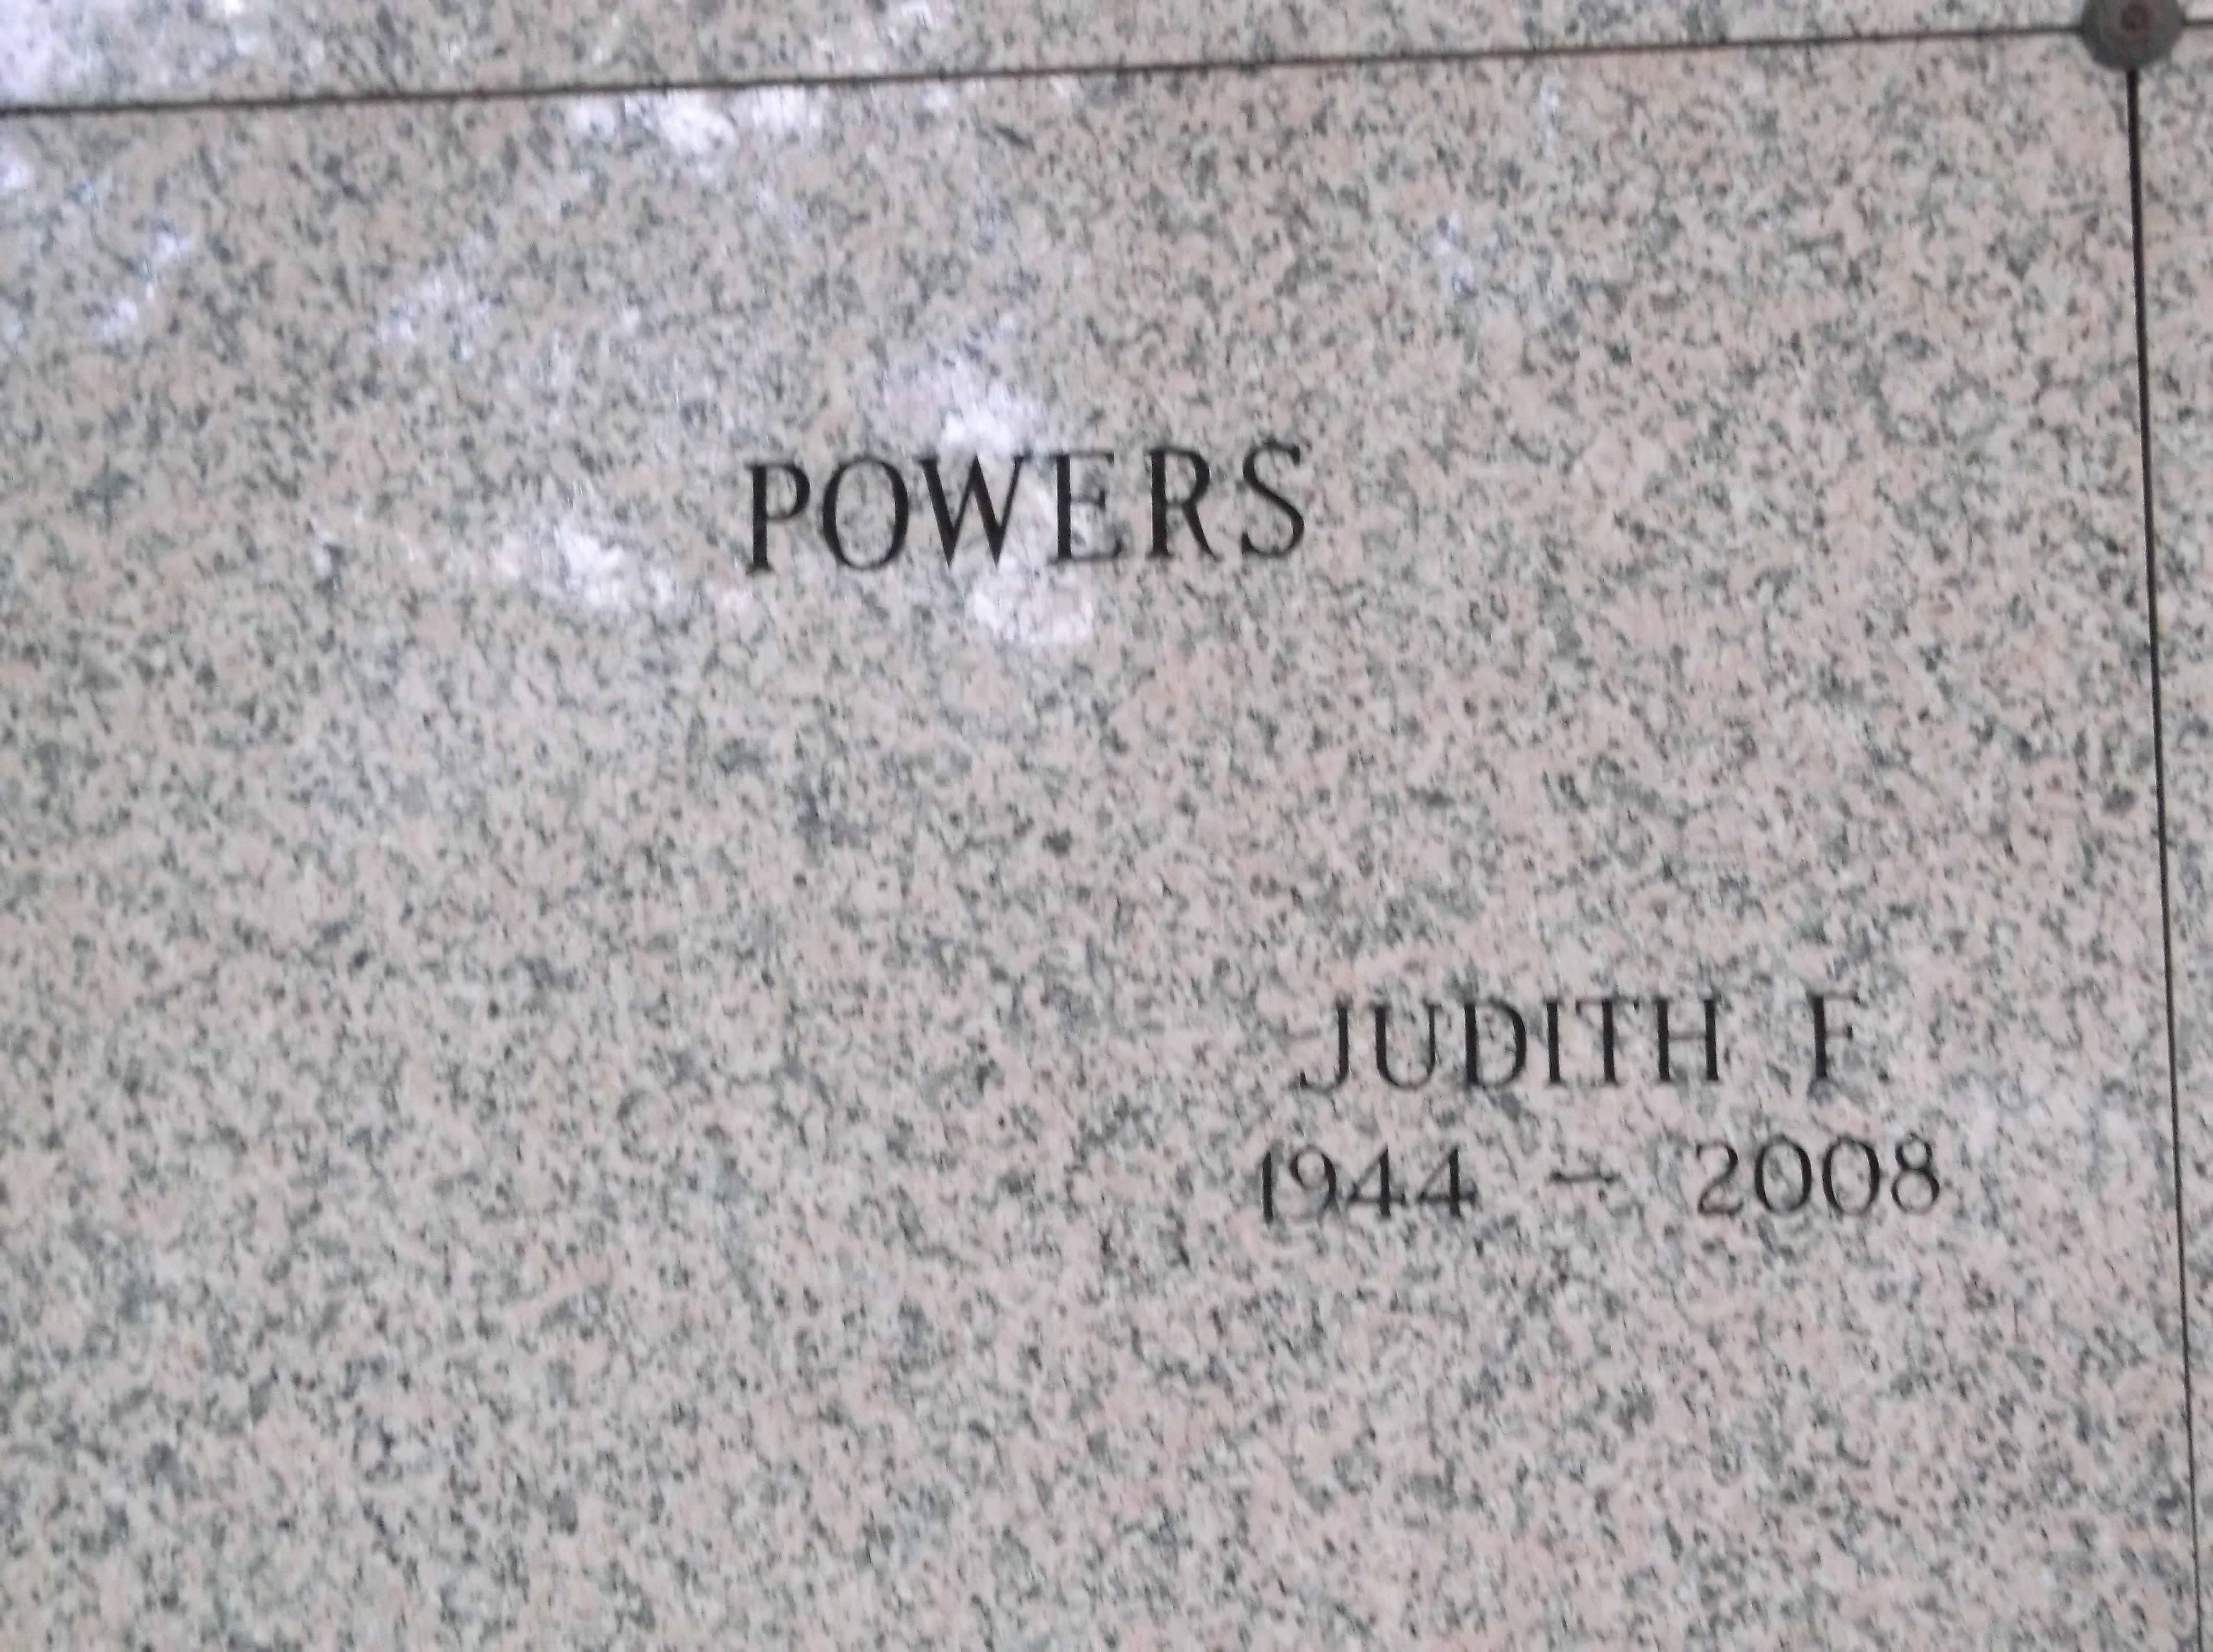 Judith F Powers